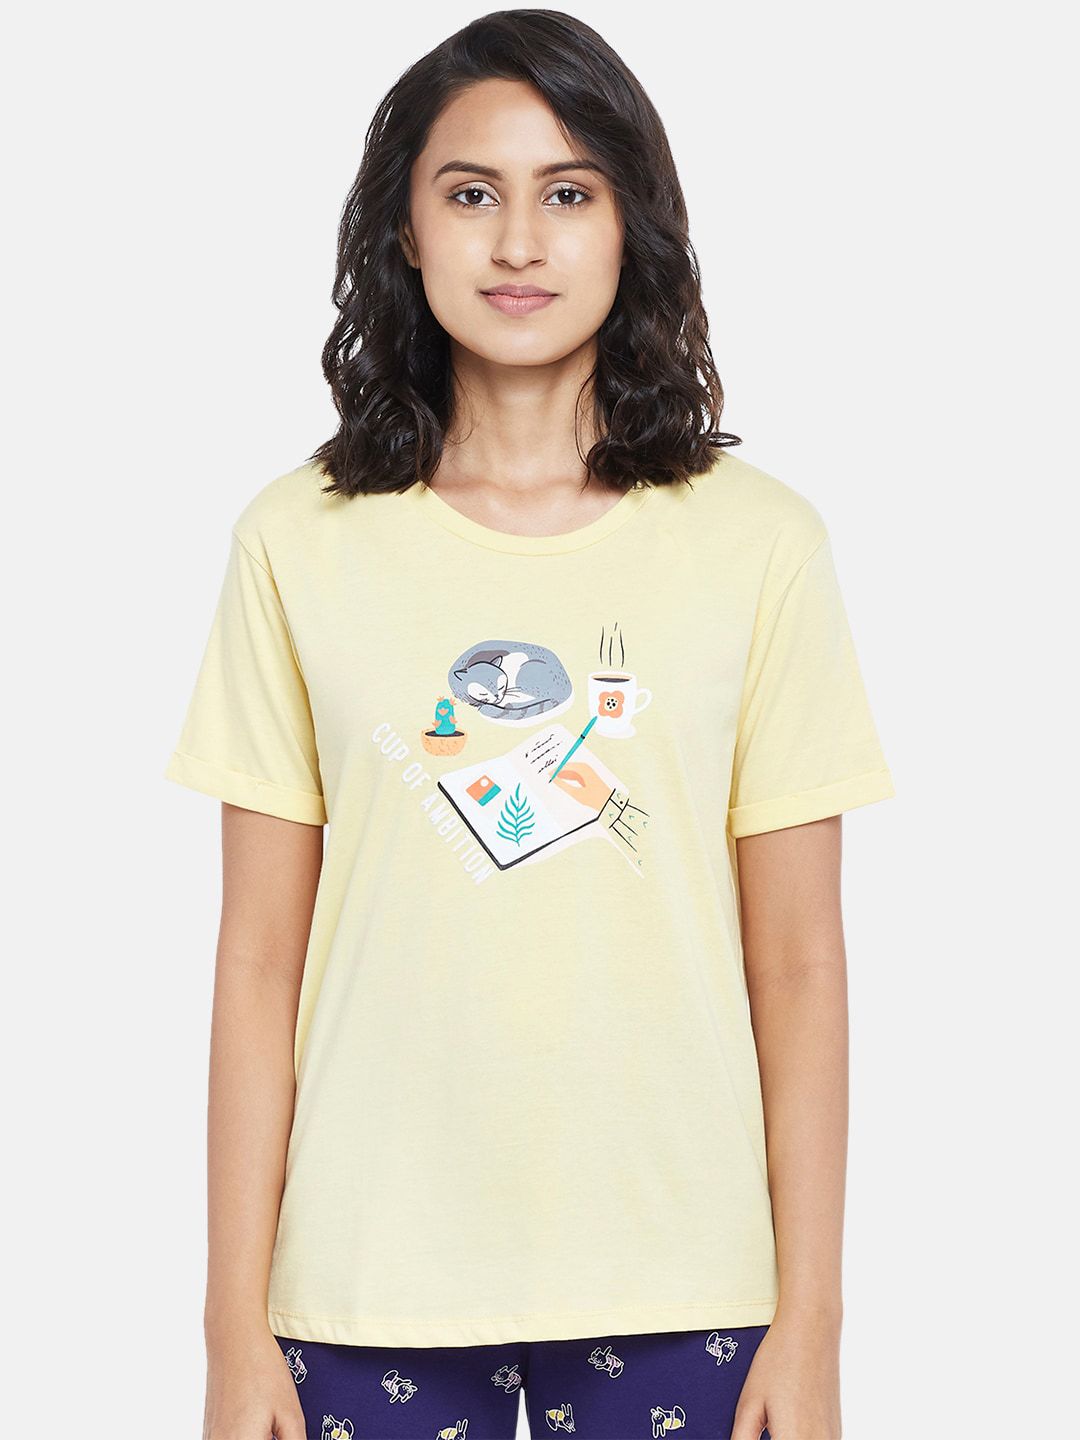 Dreamz by Pantaloons Women Mustard Yellow & White Printed Cotton Lounge T-shirt Price in India